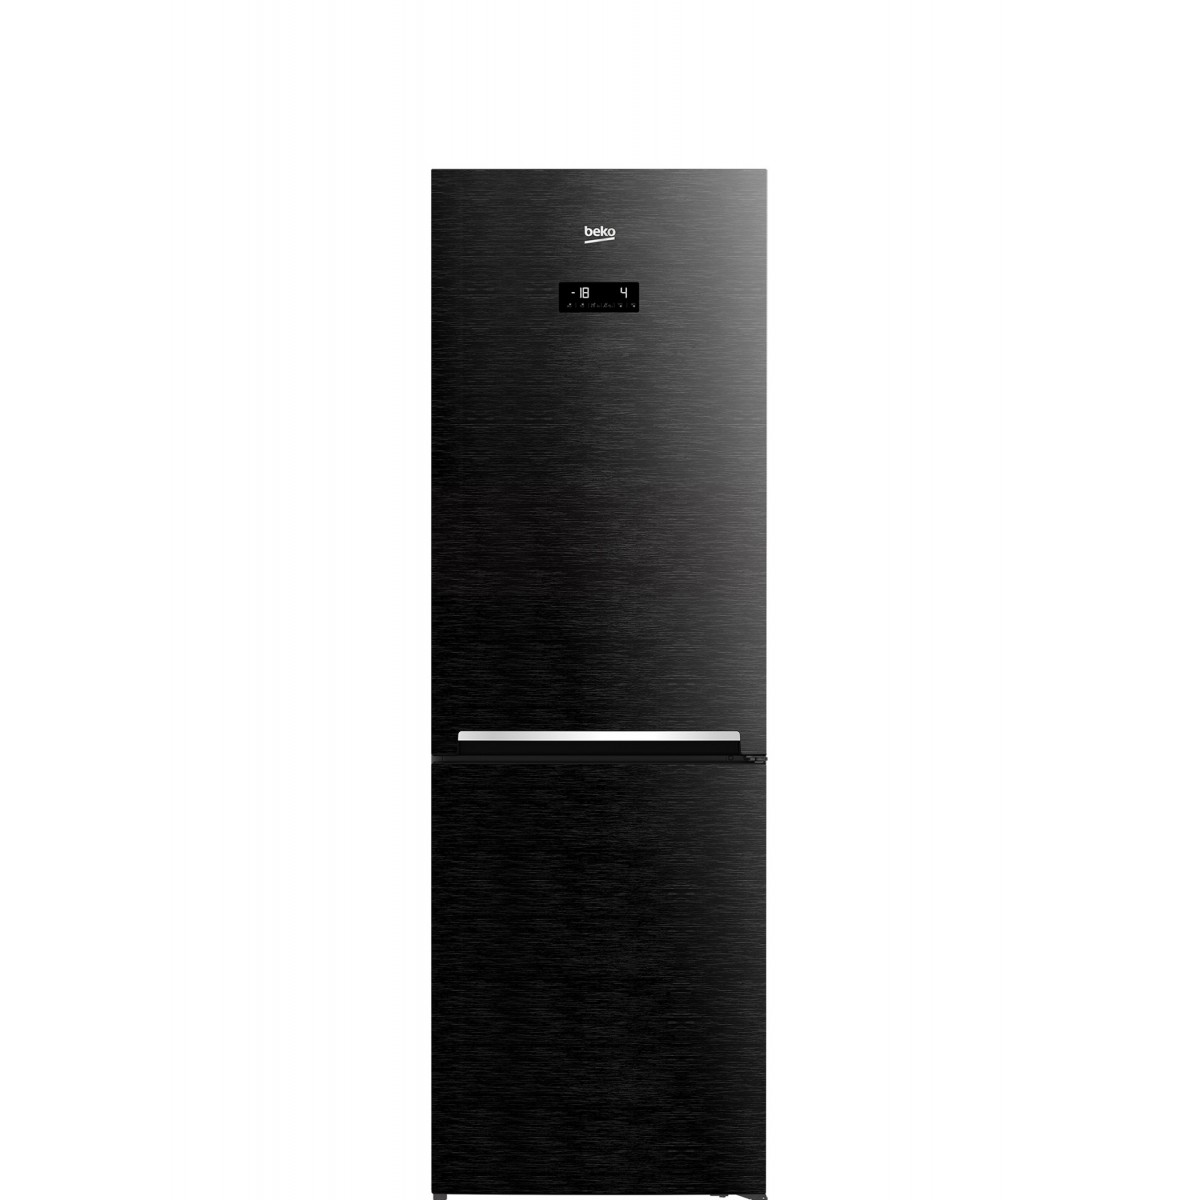 Холодильник черный с морозильником. Beko rcnk400 холодильник черный. Холодильник Beko rcnk400e20zwb. Beko rcnk310e20vs. Двухкамерный холодильник Beko rcnk400e20zgb.